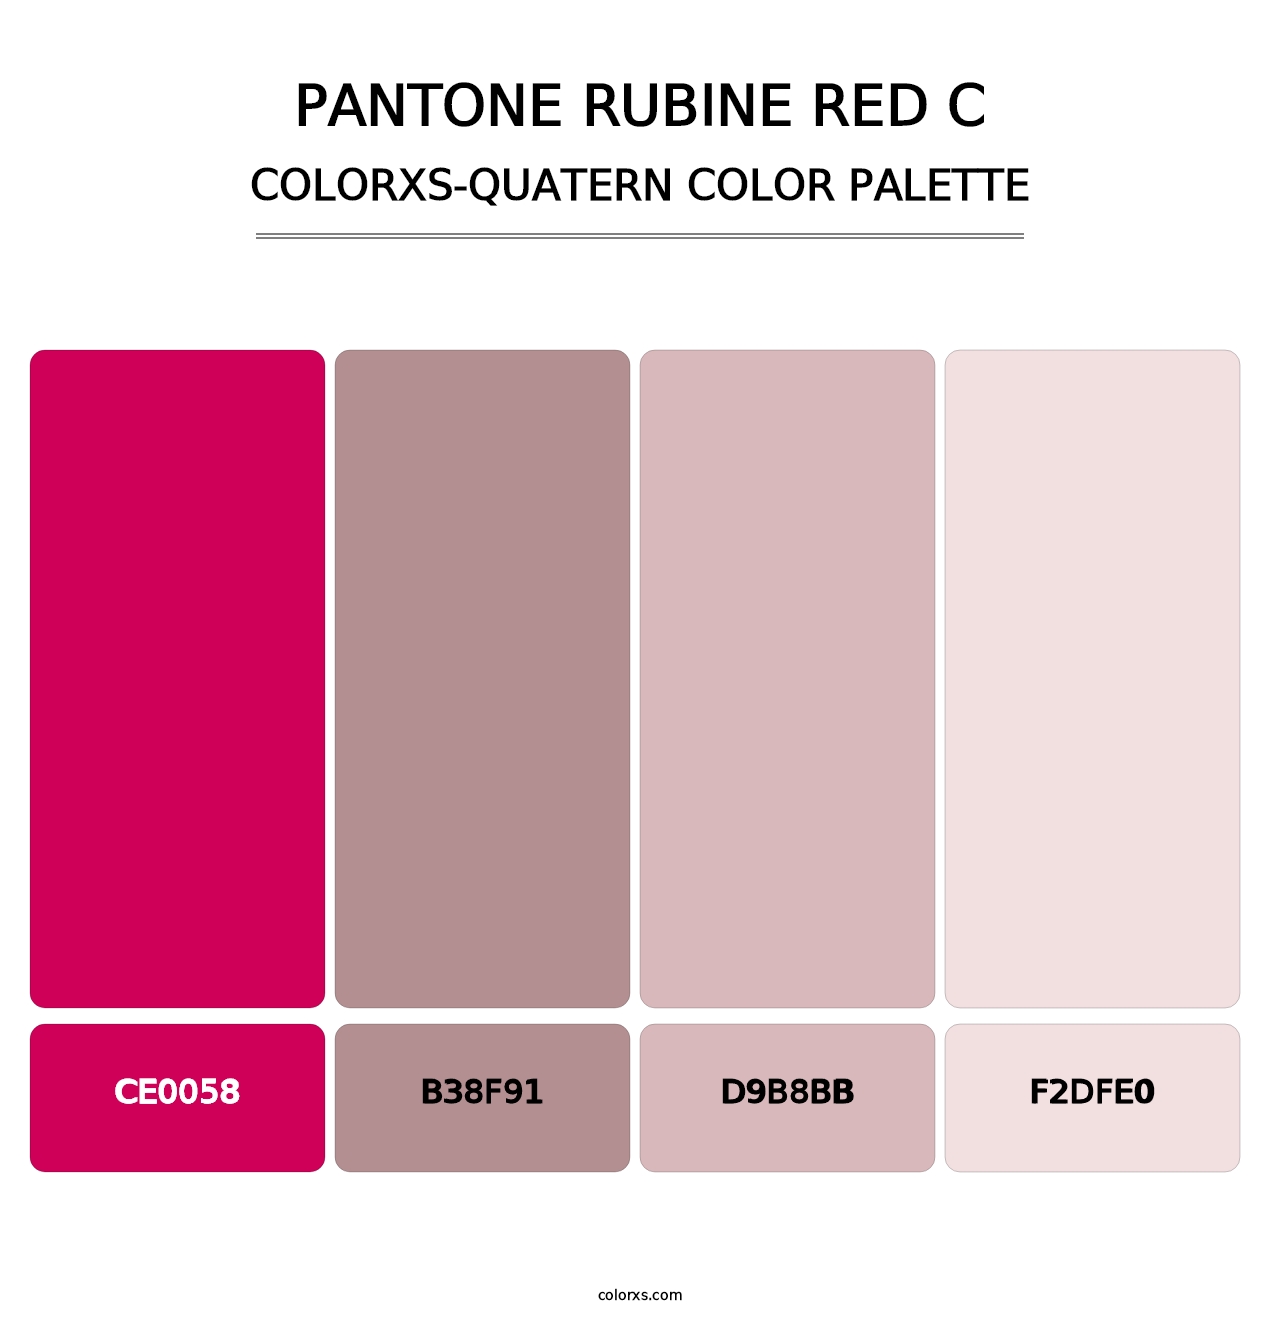 PANTONE Rubine Red C - Colorxs Quatern Palette